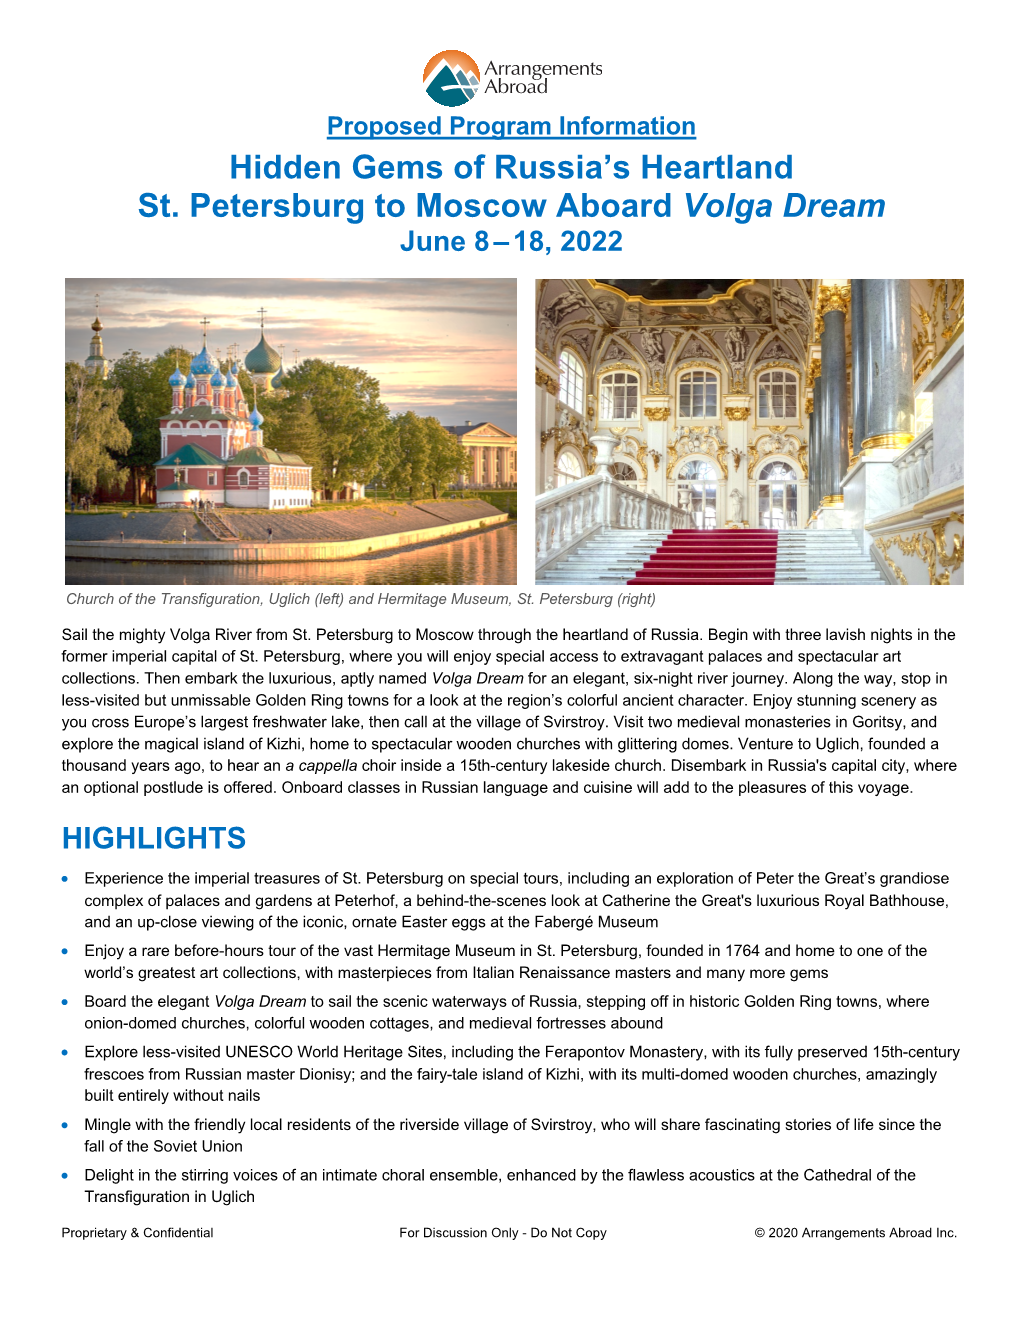 Hidden Gems of Russia's Heartland St. Petersburg to Moscow